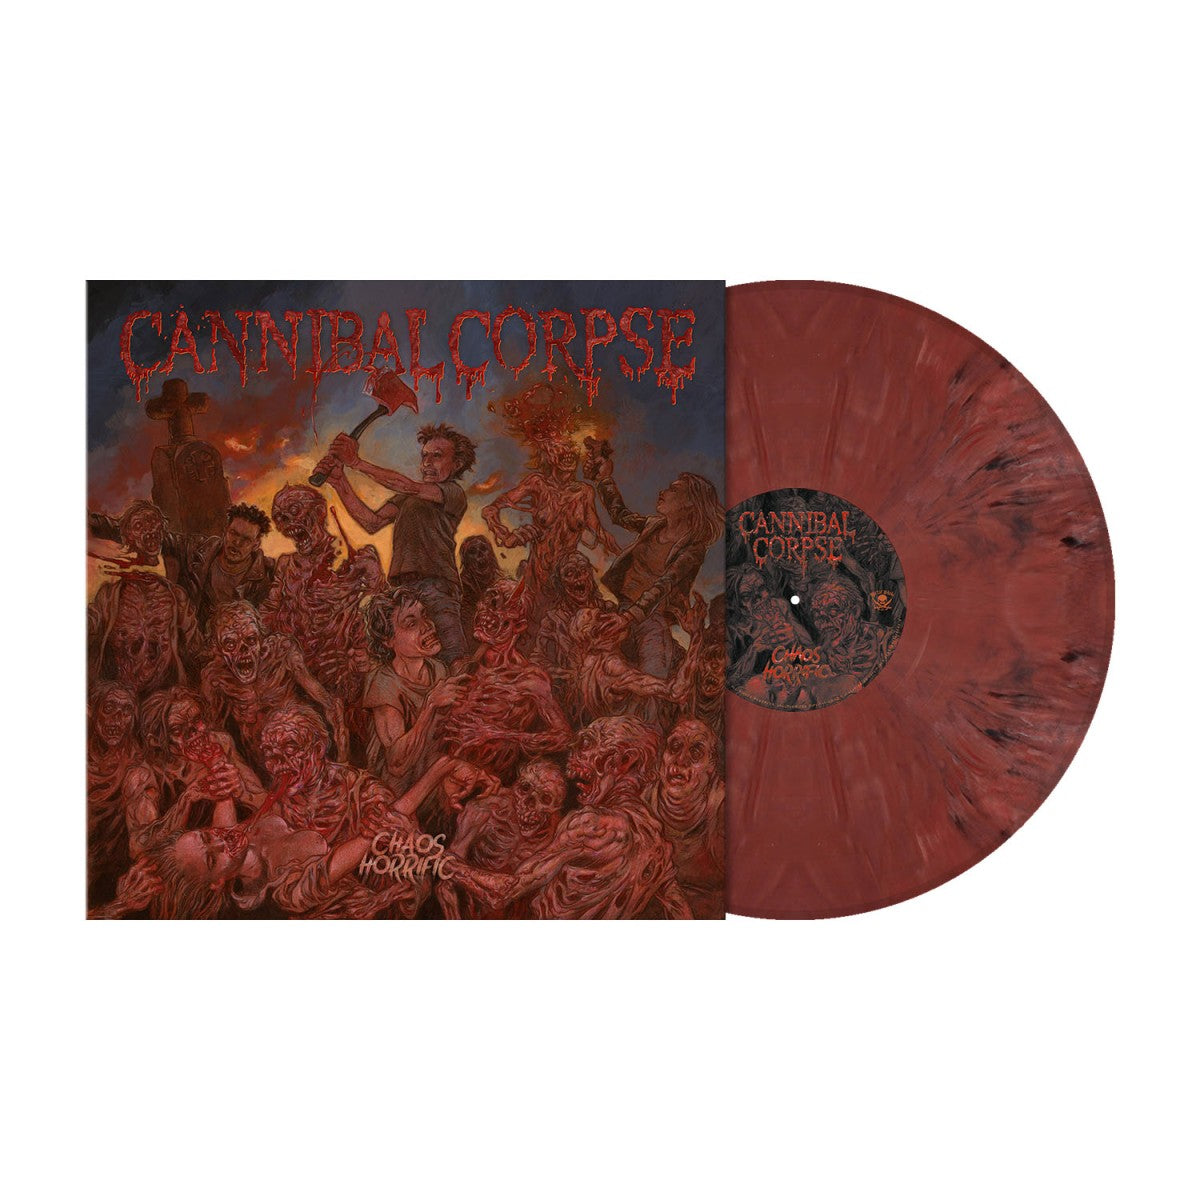 Cannibal Corpse "Chaos Horrific" Burnt Flesh Vinyl